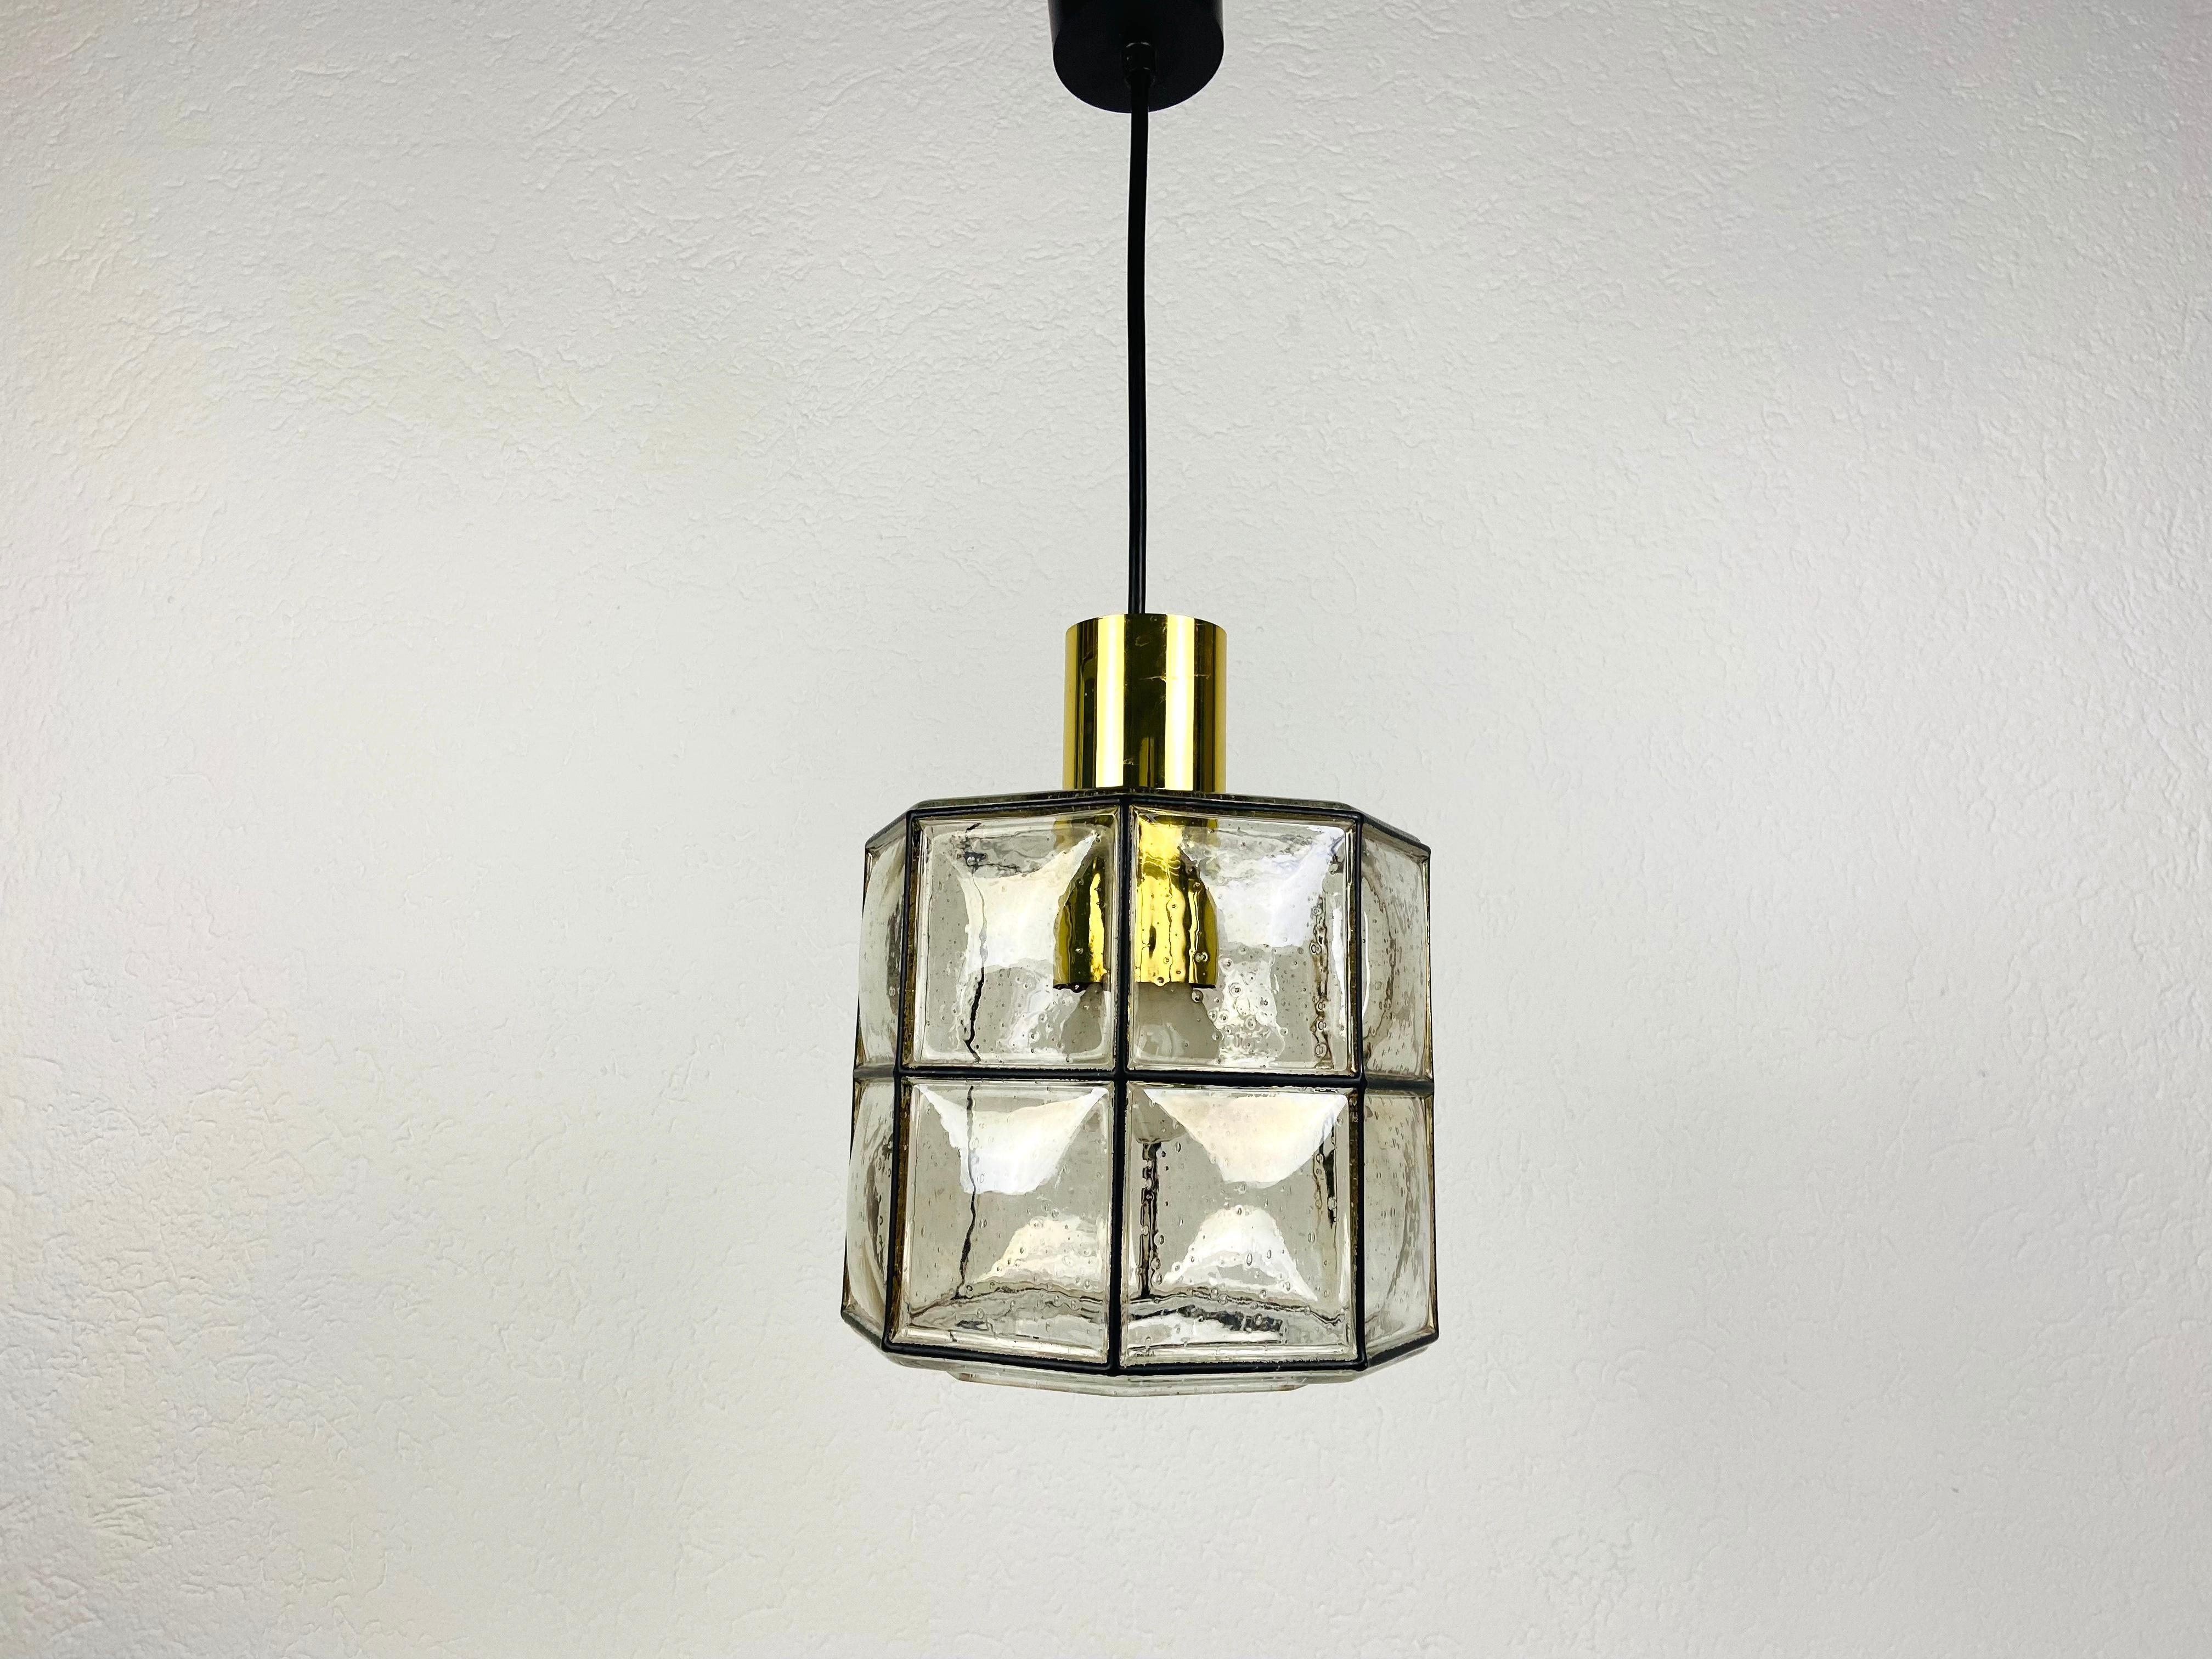 Midcentury Iron and Bubble Glass Pendant Lamp by Glashütte Limburg, 1960s For Sale 3